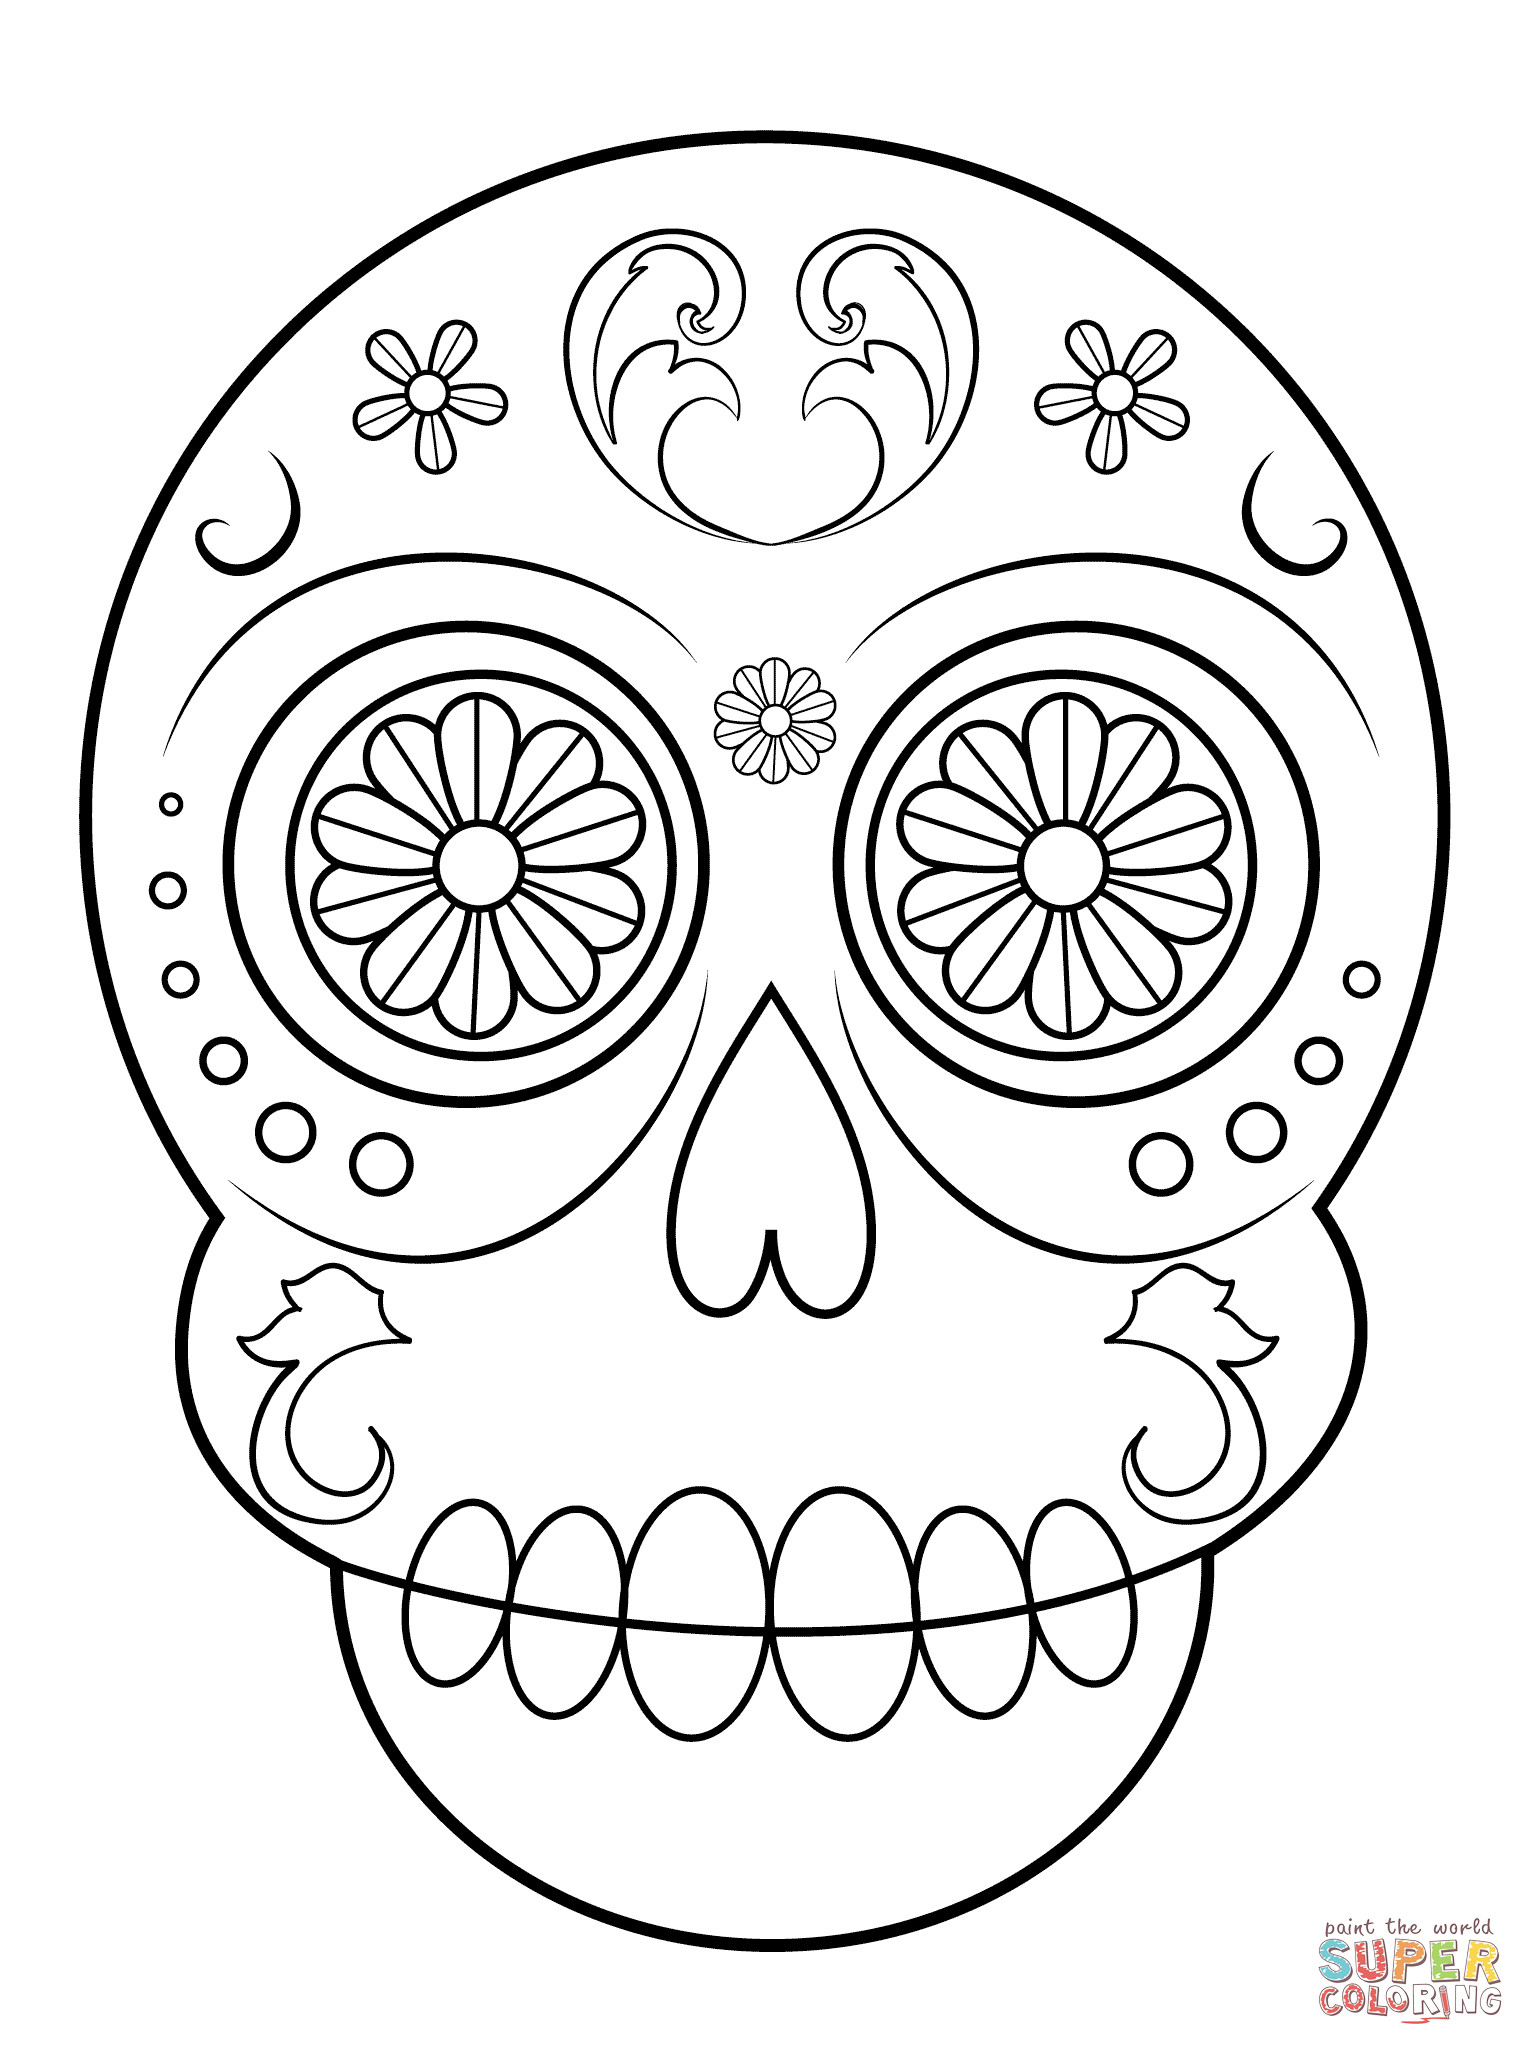 Sugar Skull Coloring Pages
 Simple Sugar Skull coloring page